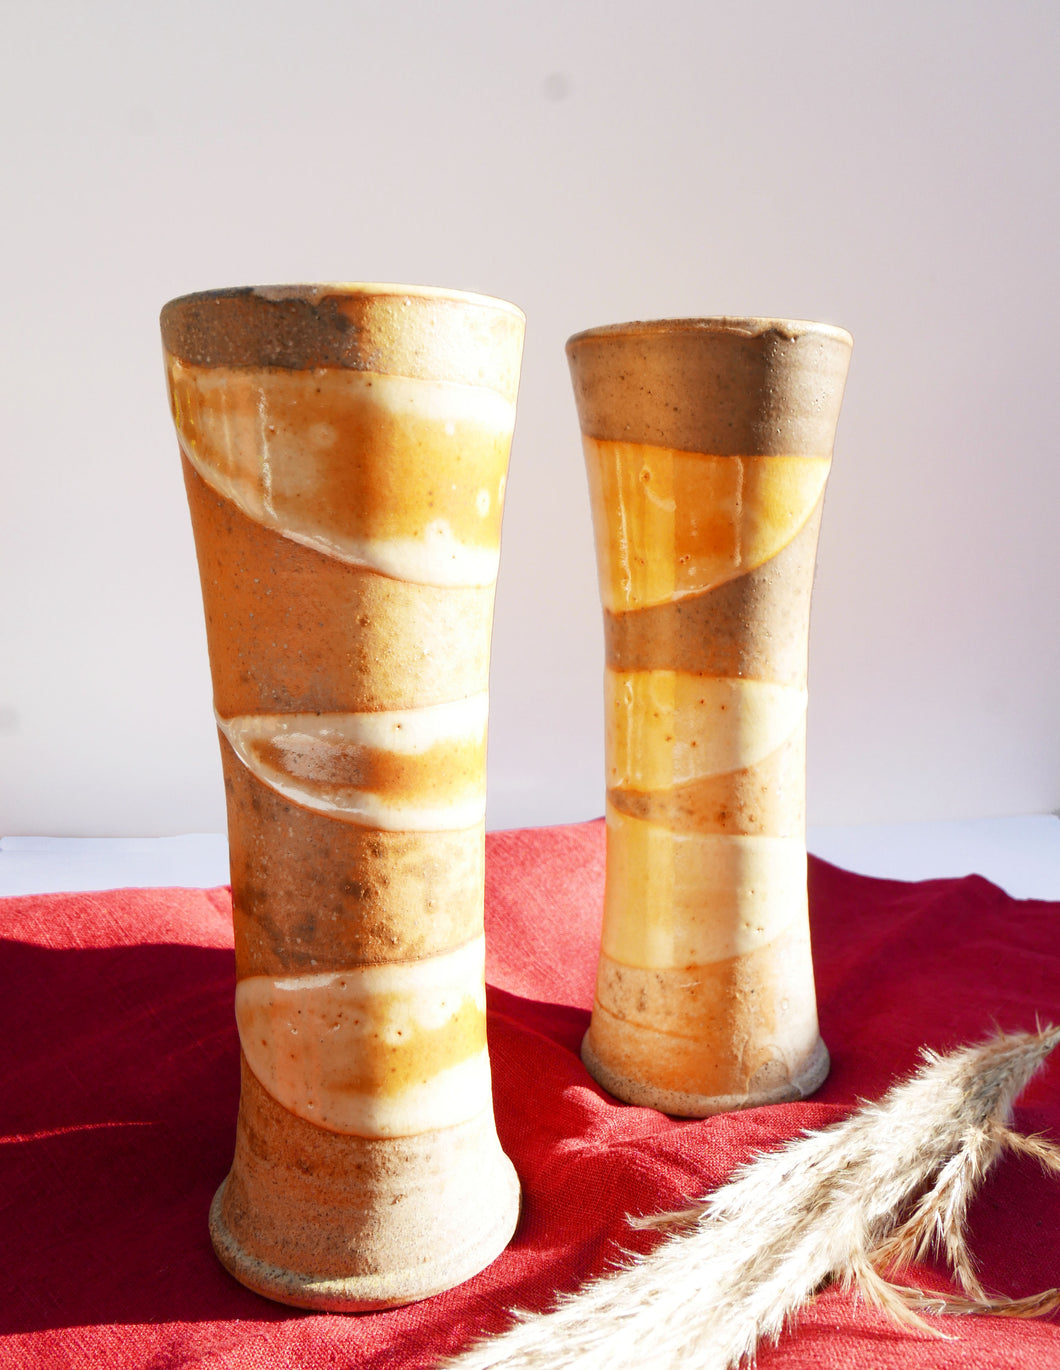 Wood Fired Stoneware Vases By Ceramic Artist ZAC SPATES,